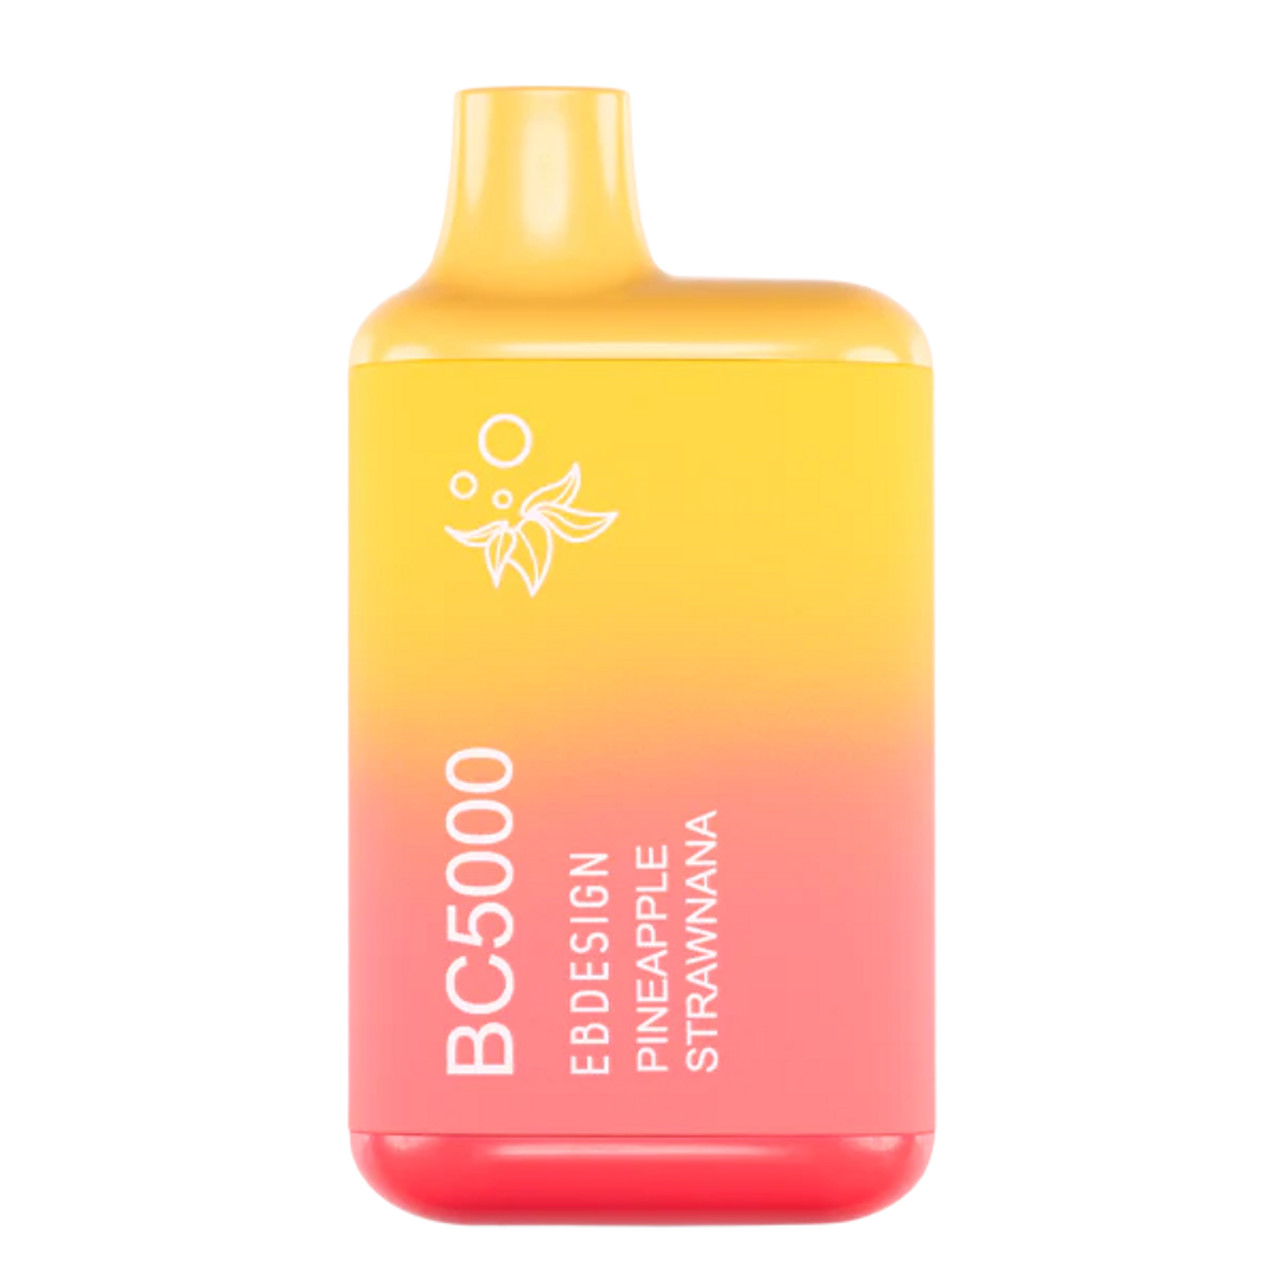 EBDESIGN BC5000 – Pineapple Strawnana